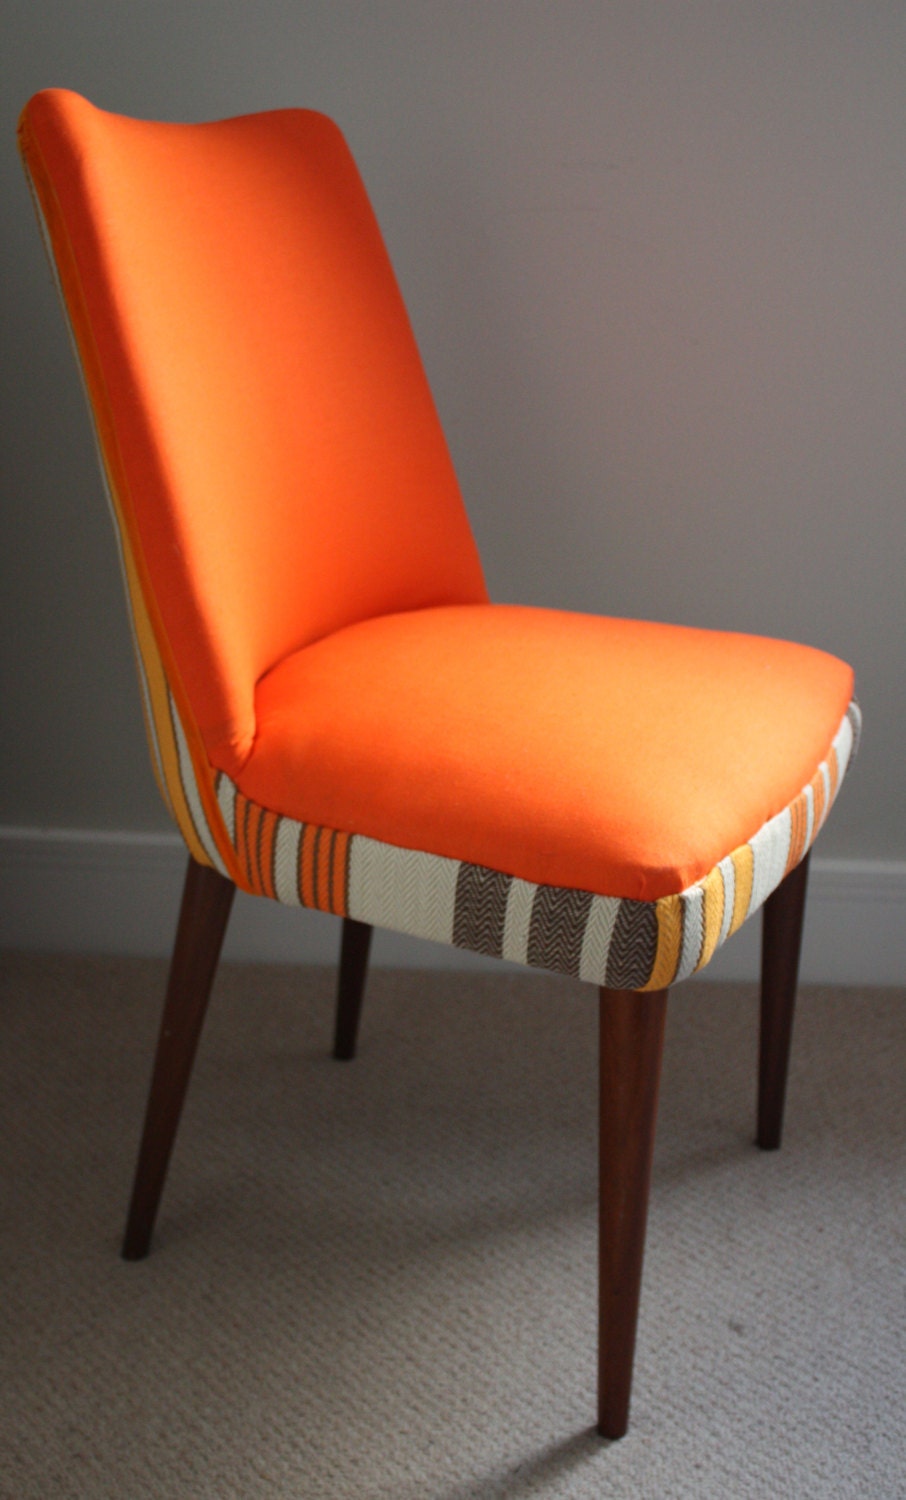 Retro Orange Chair - TOTChaise